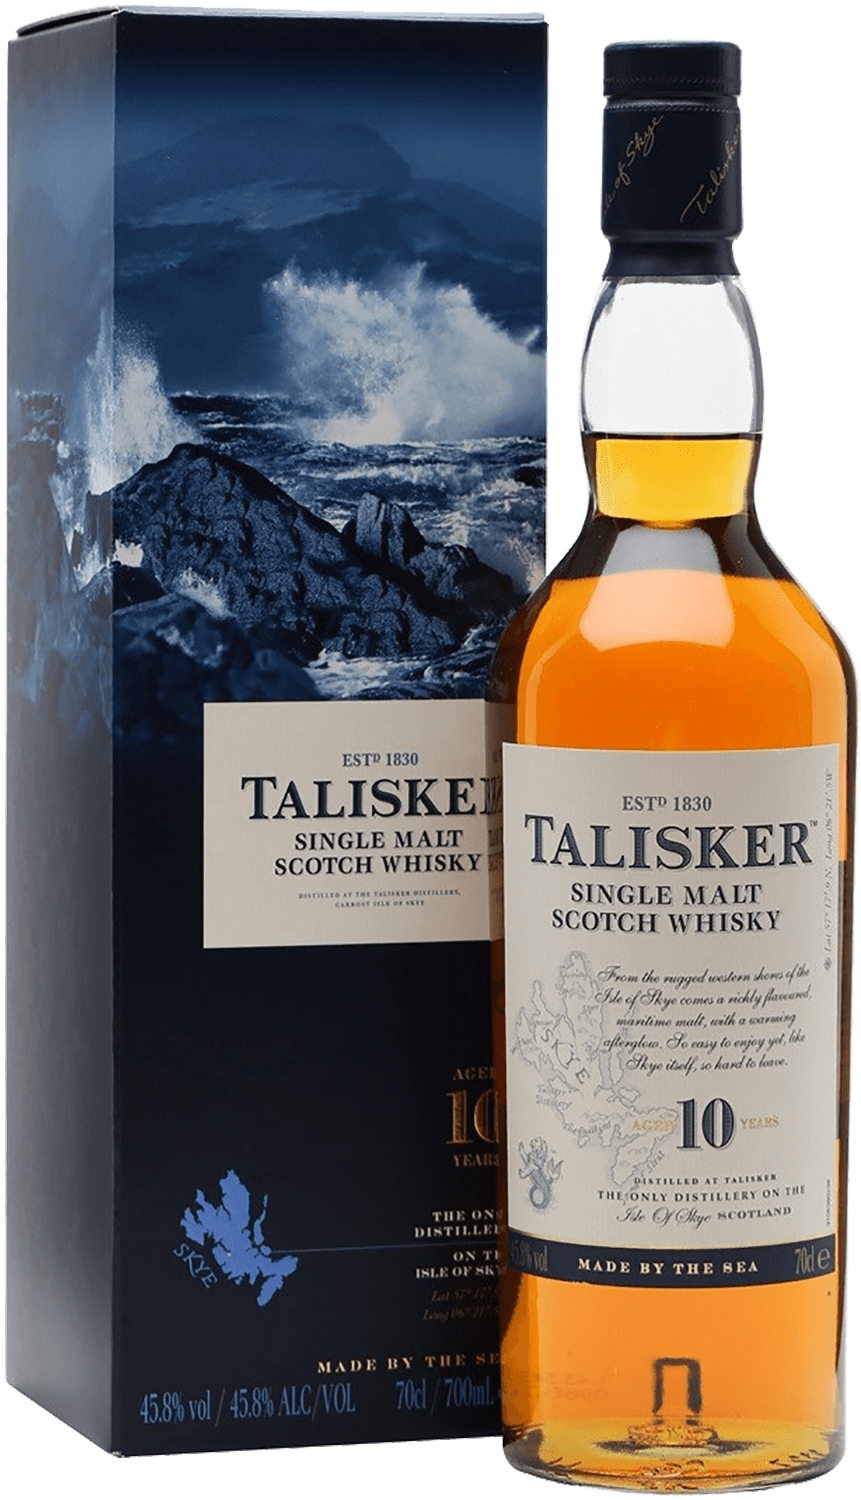 Talisker 10 years single malt scotch whisky (gift box) tullamore dew 14 years old single malt scotch whisky gift box